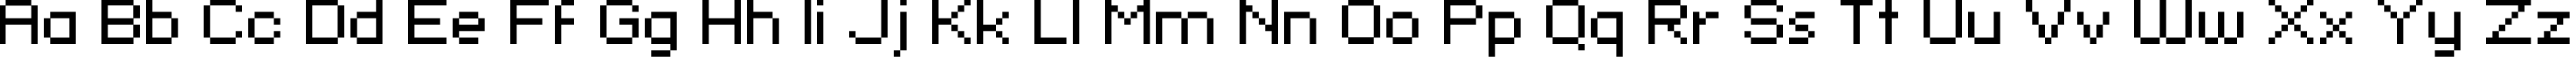 Пример написания английского алфавита шрифтом standard 07_53